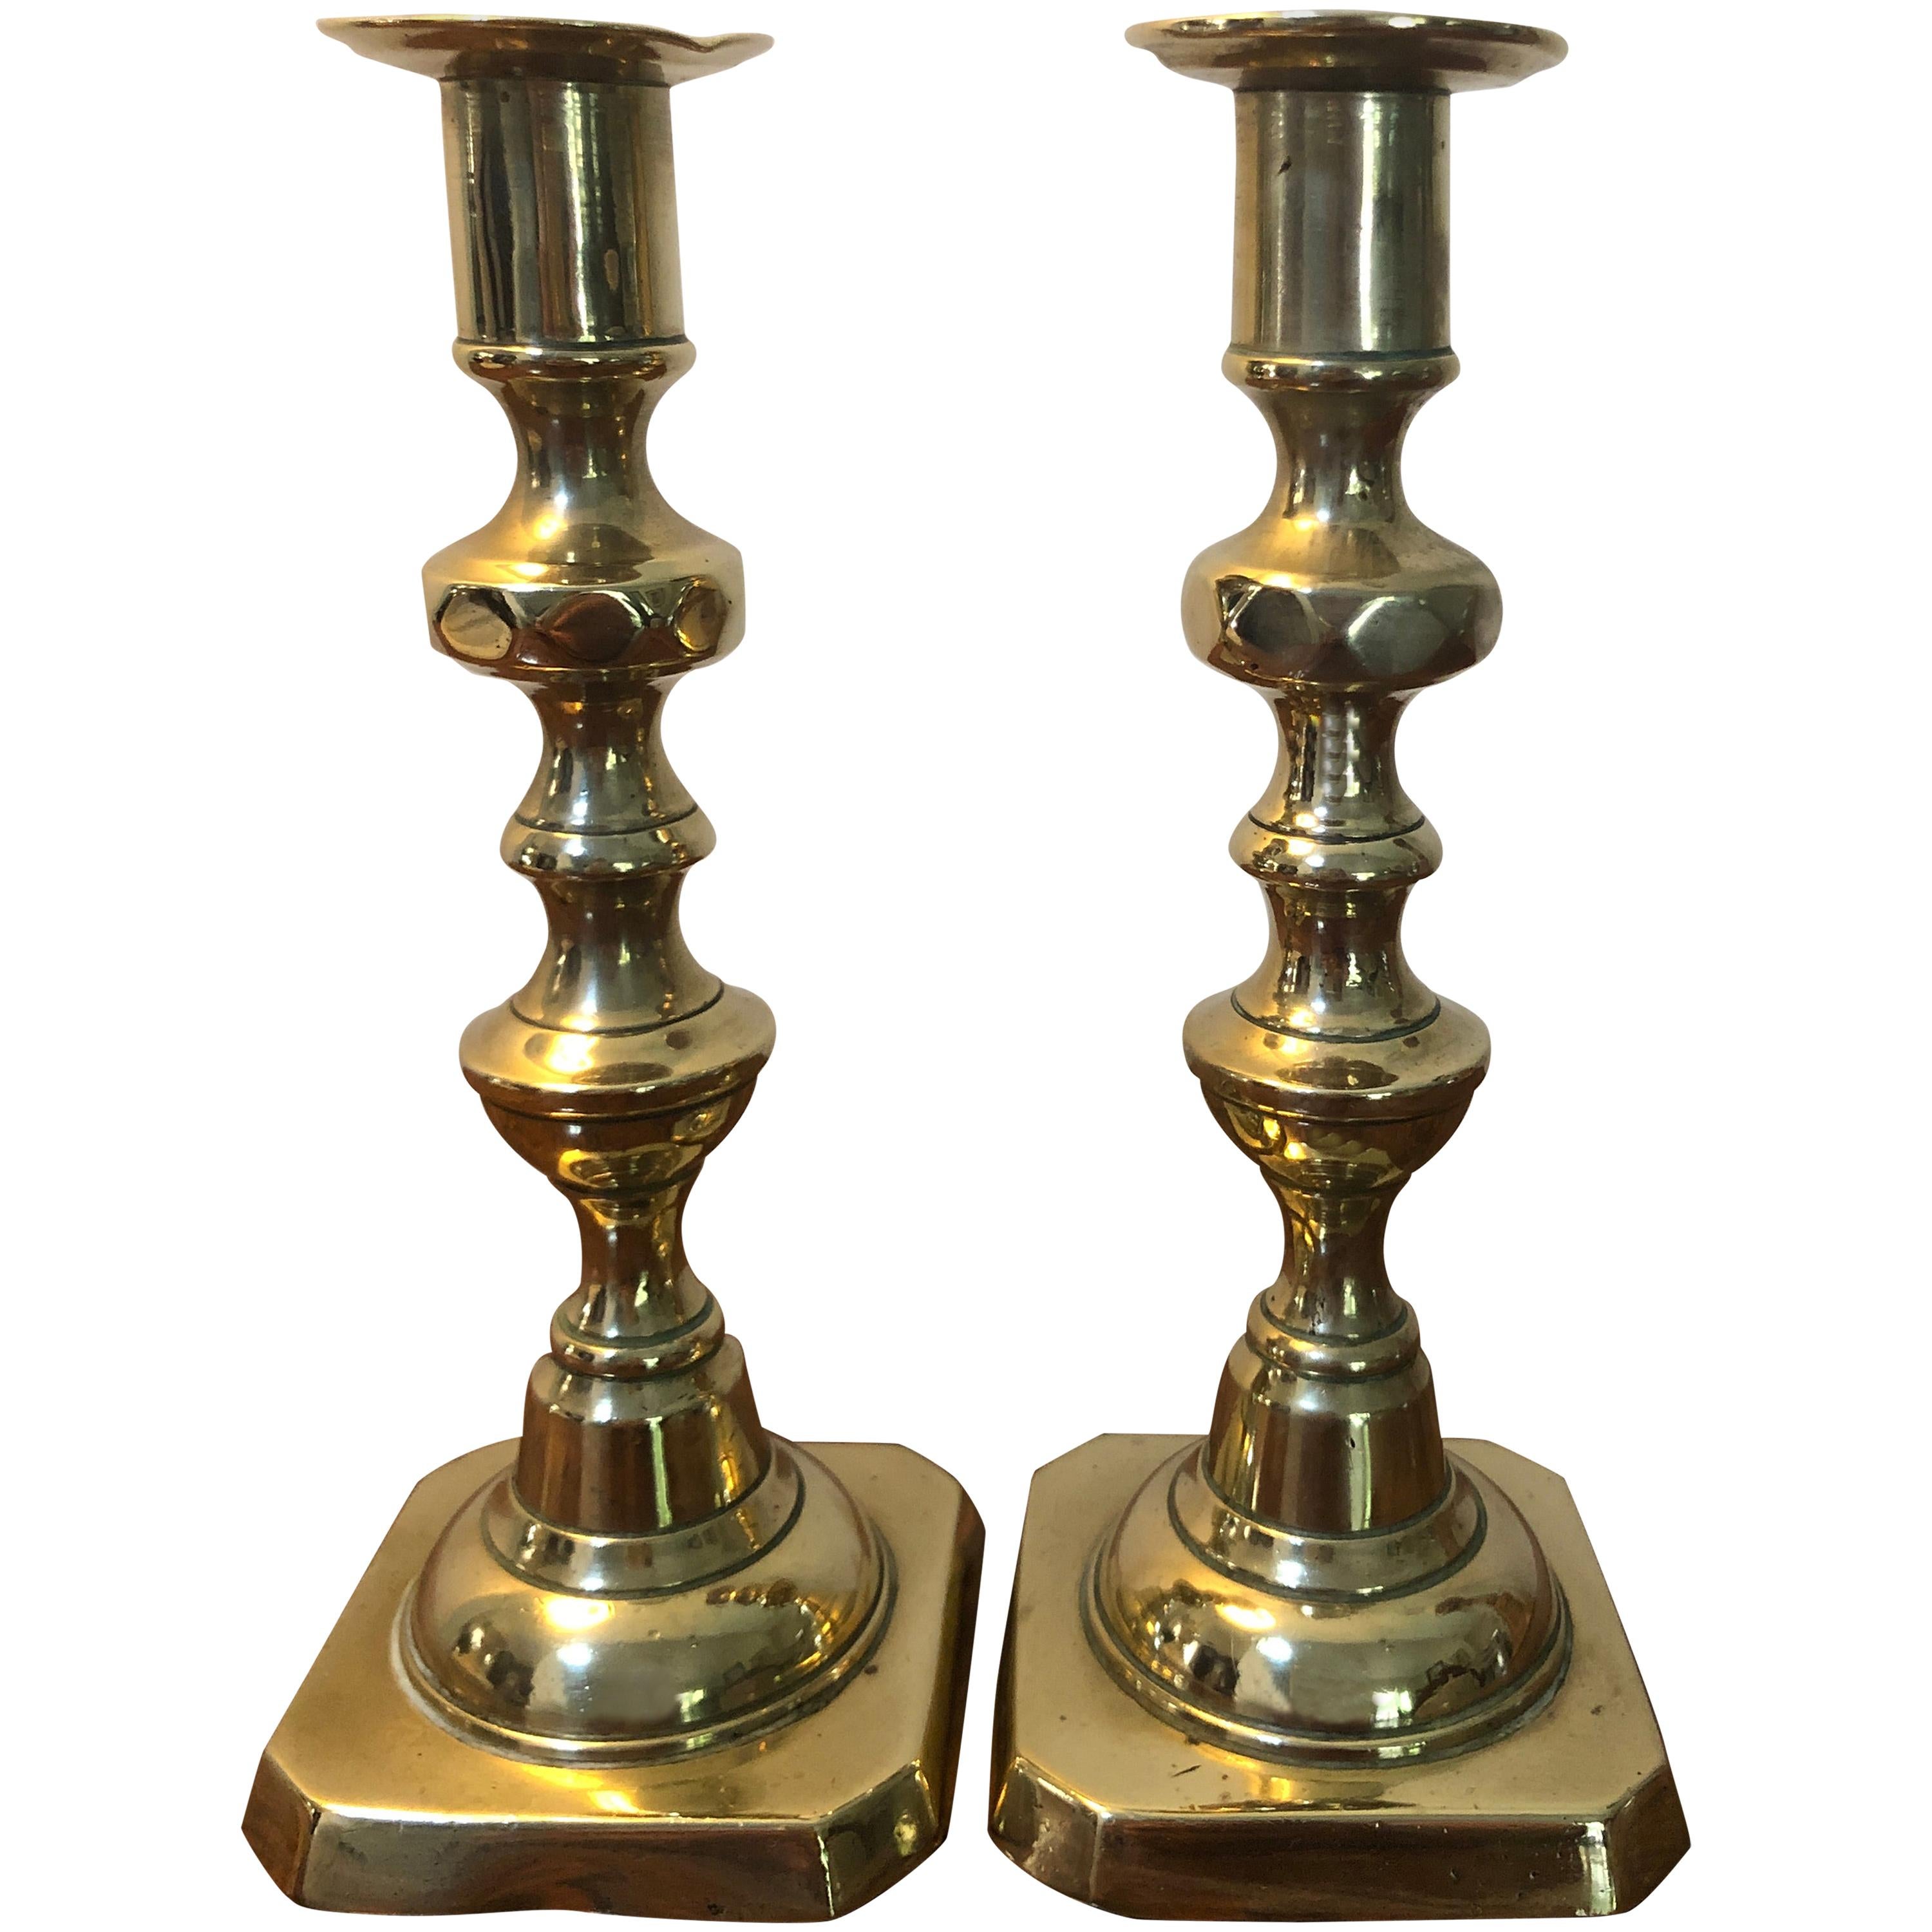 Small Antique Pair of Brass Candlesticks, circa 1820